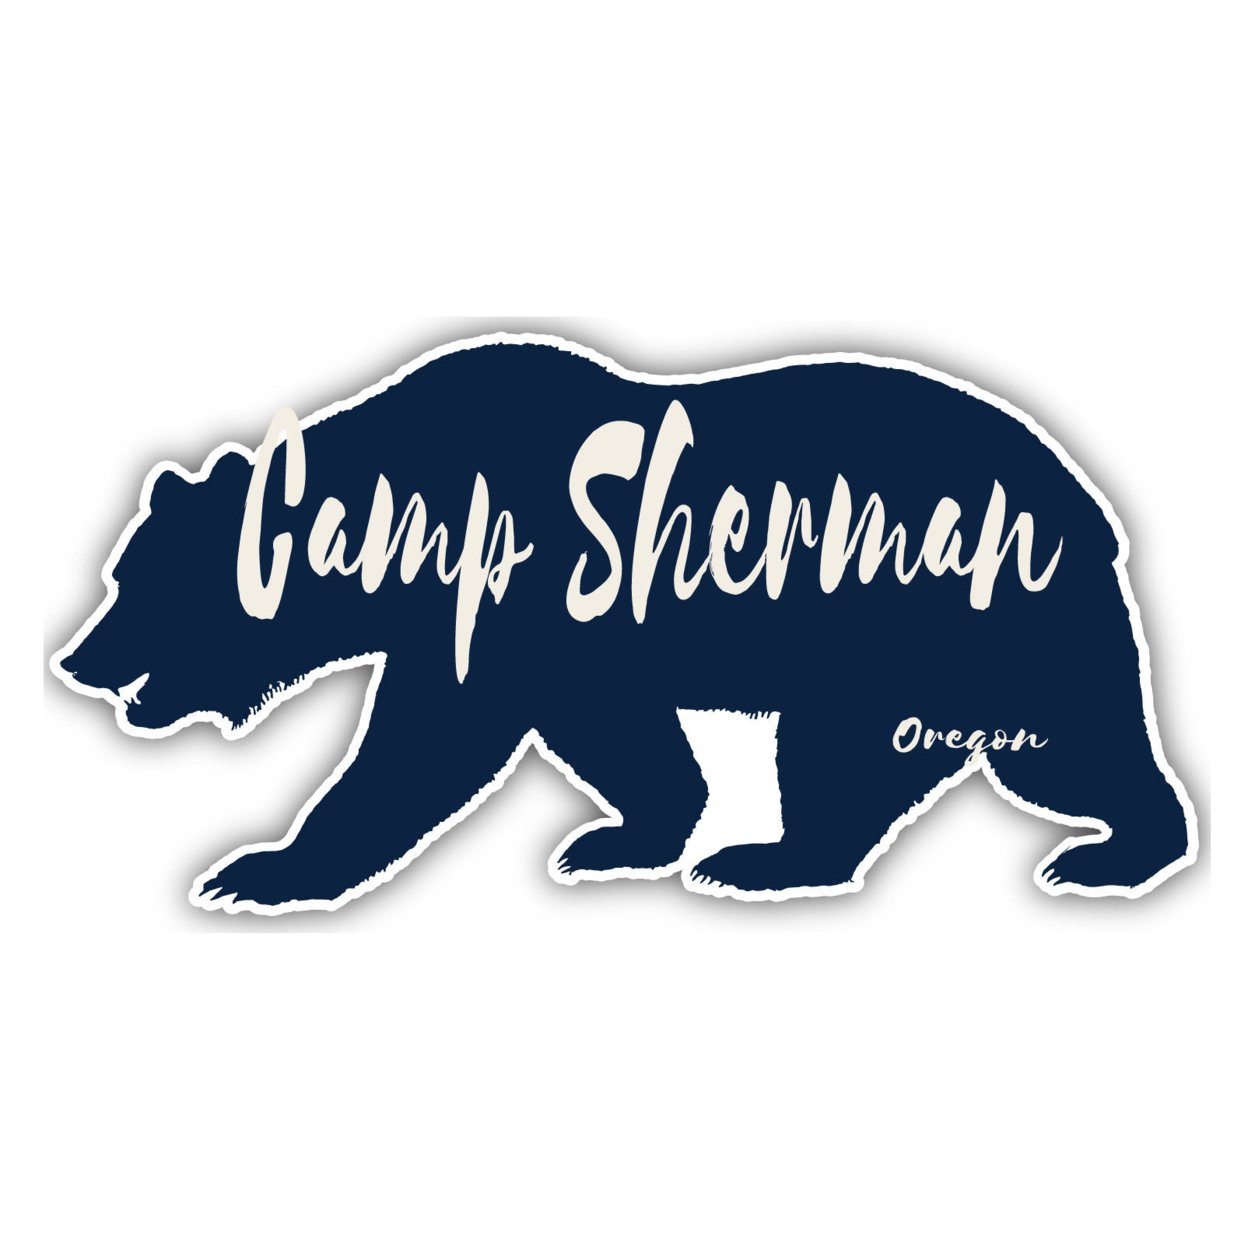 Camp Sherman Oregon Souvenir Decorative Stickers (Choose Theme And Size) - Single Unit, 2-Inch, Bear